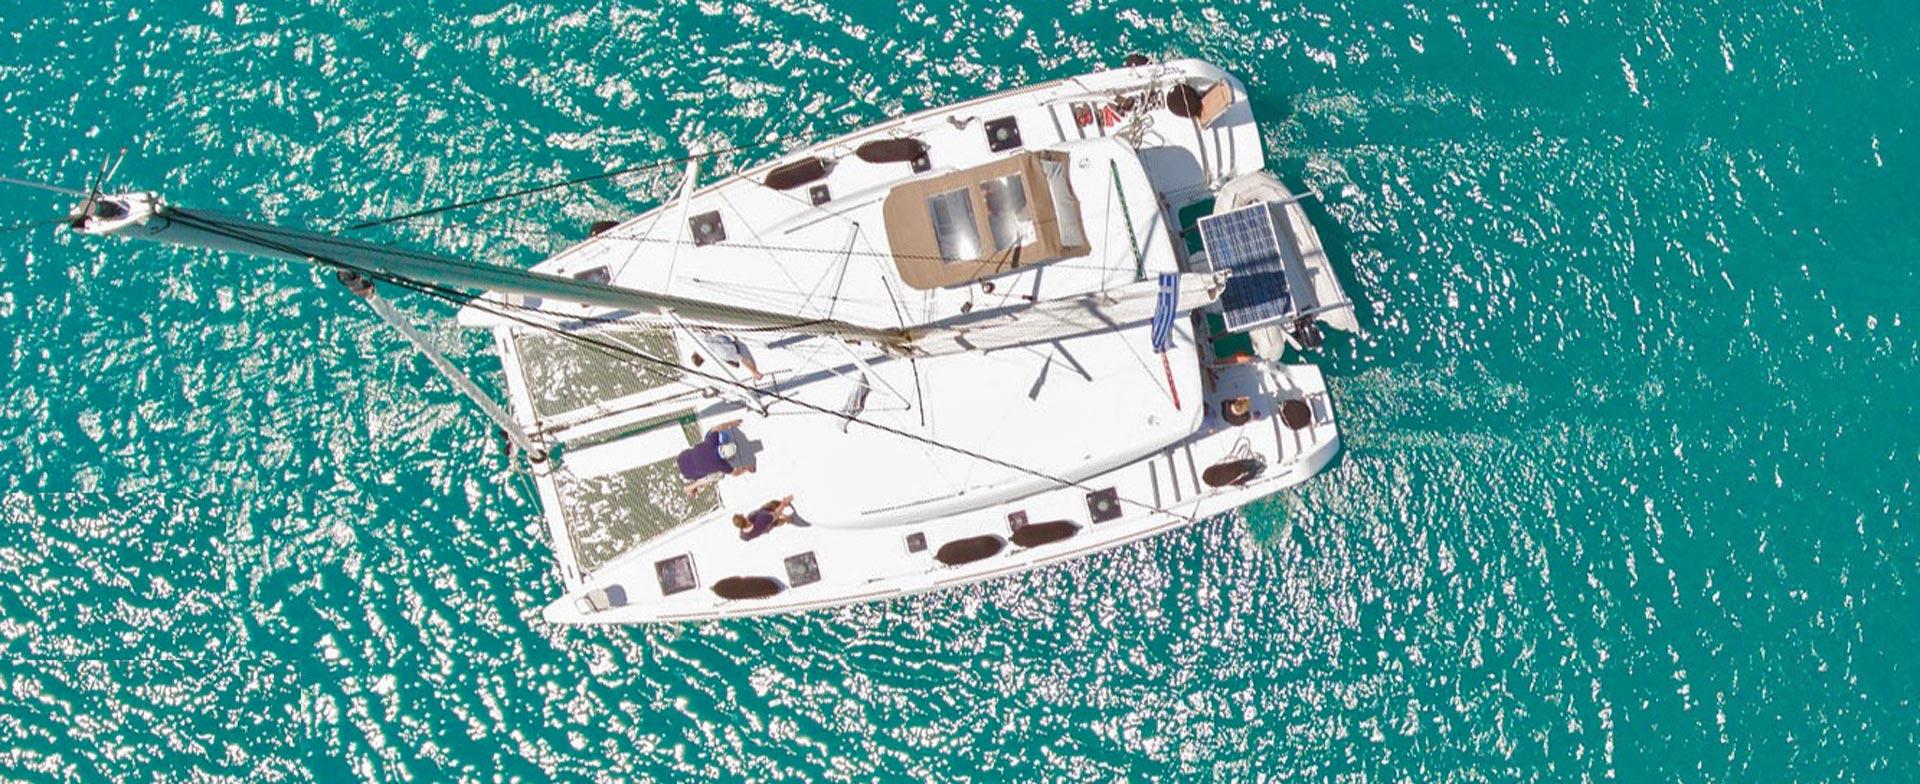 Athens Gold Yachting - X-Plorer Catamaran